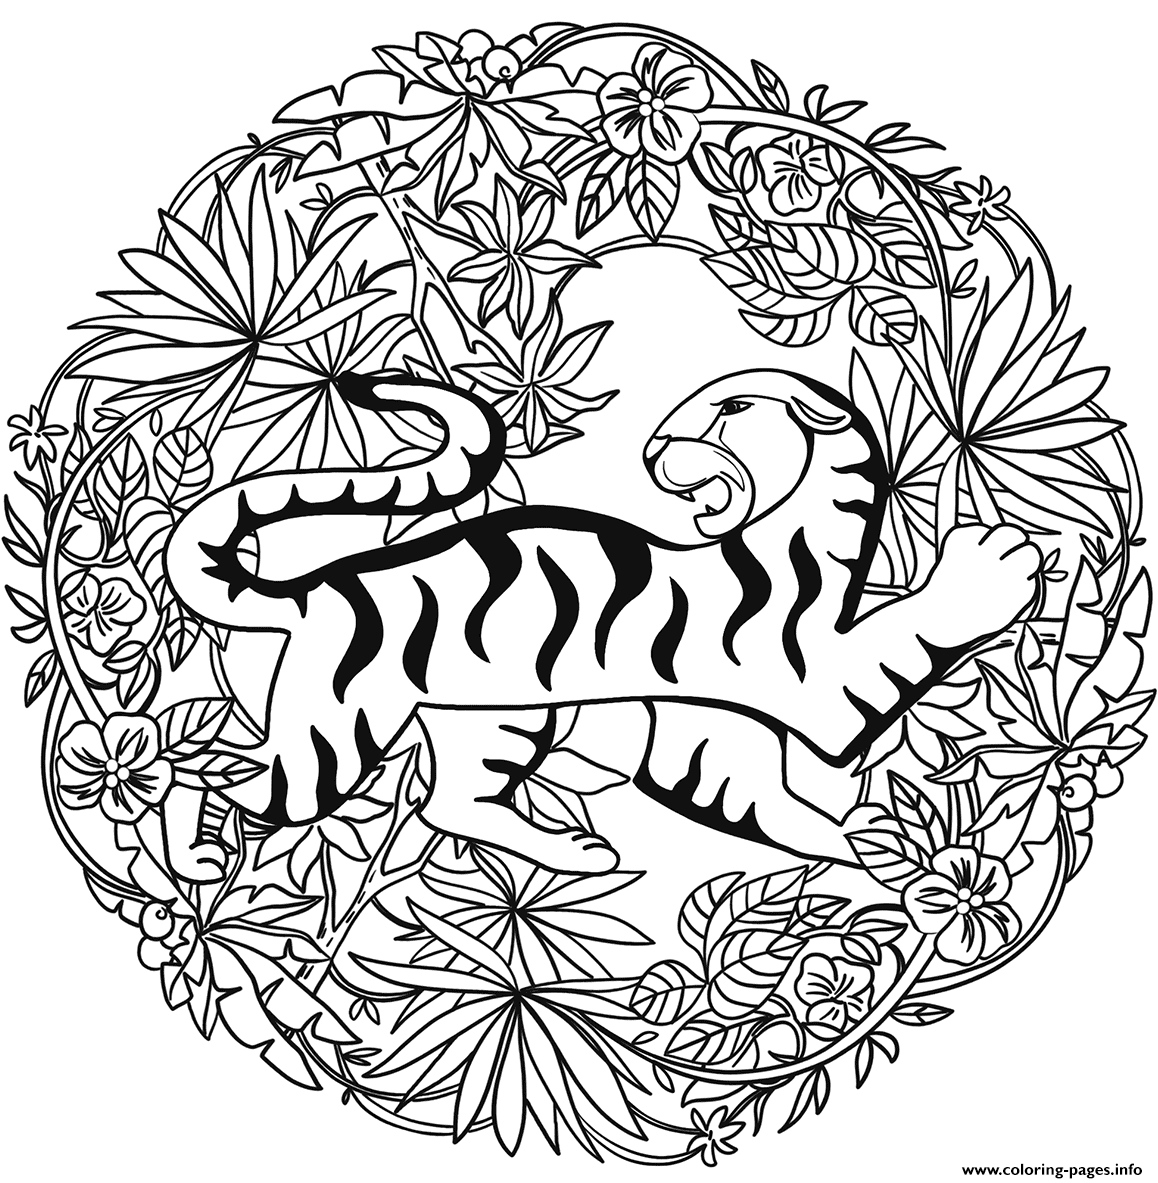 Tiger Mandala Animal coloring